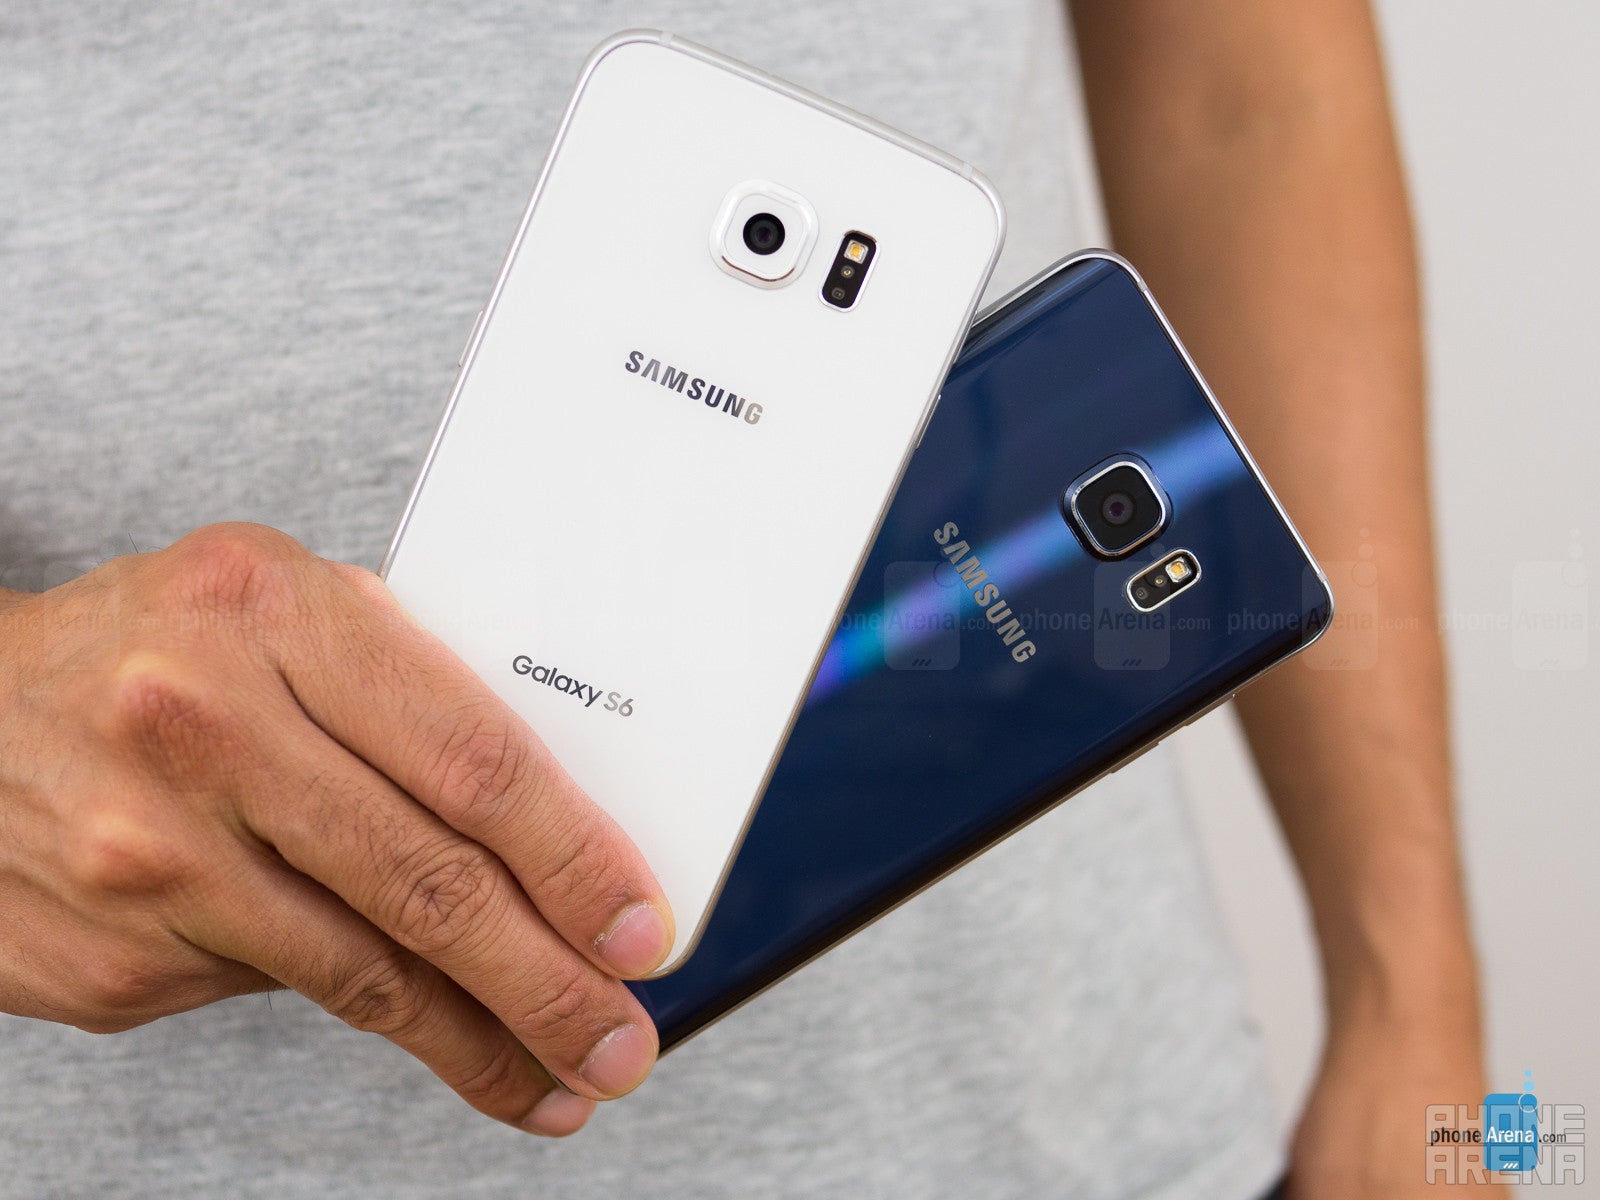 Samsung Galaxy Note5 vs Samsung Galaxy S6